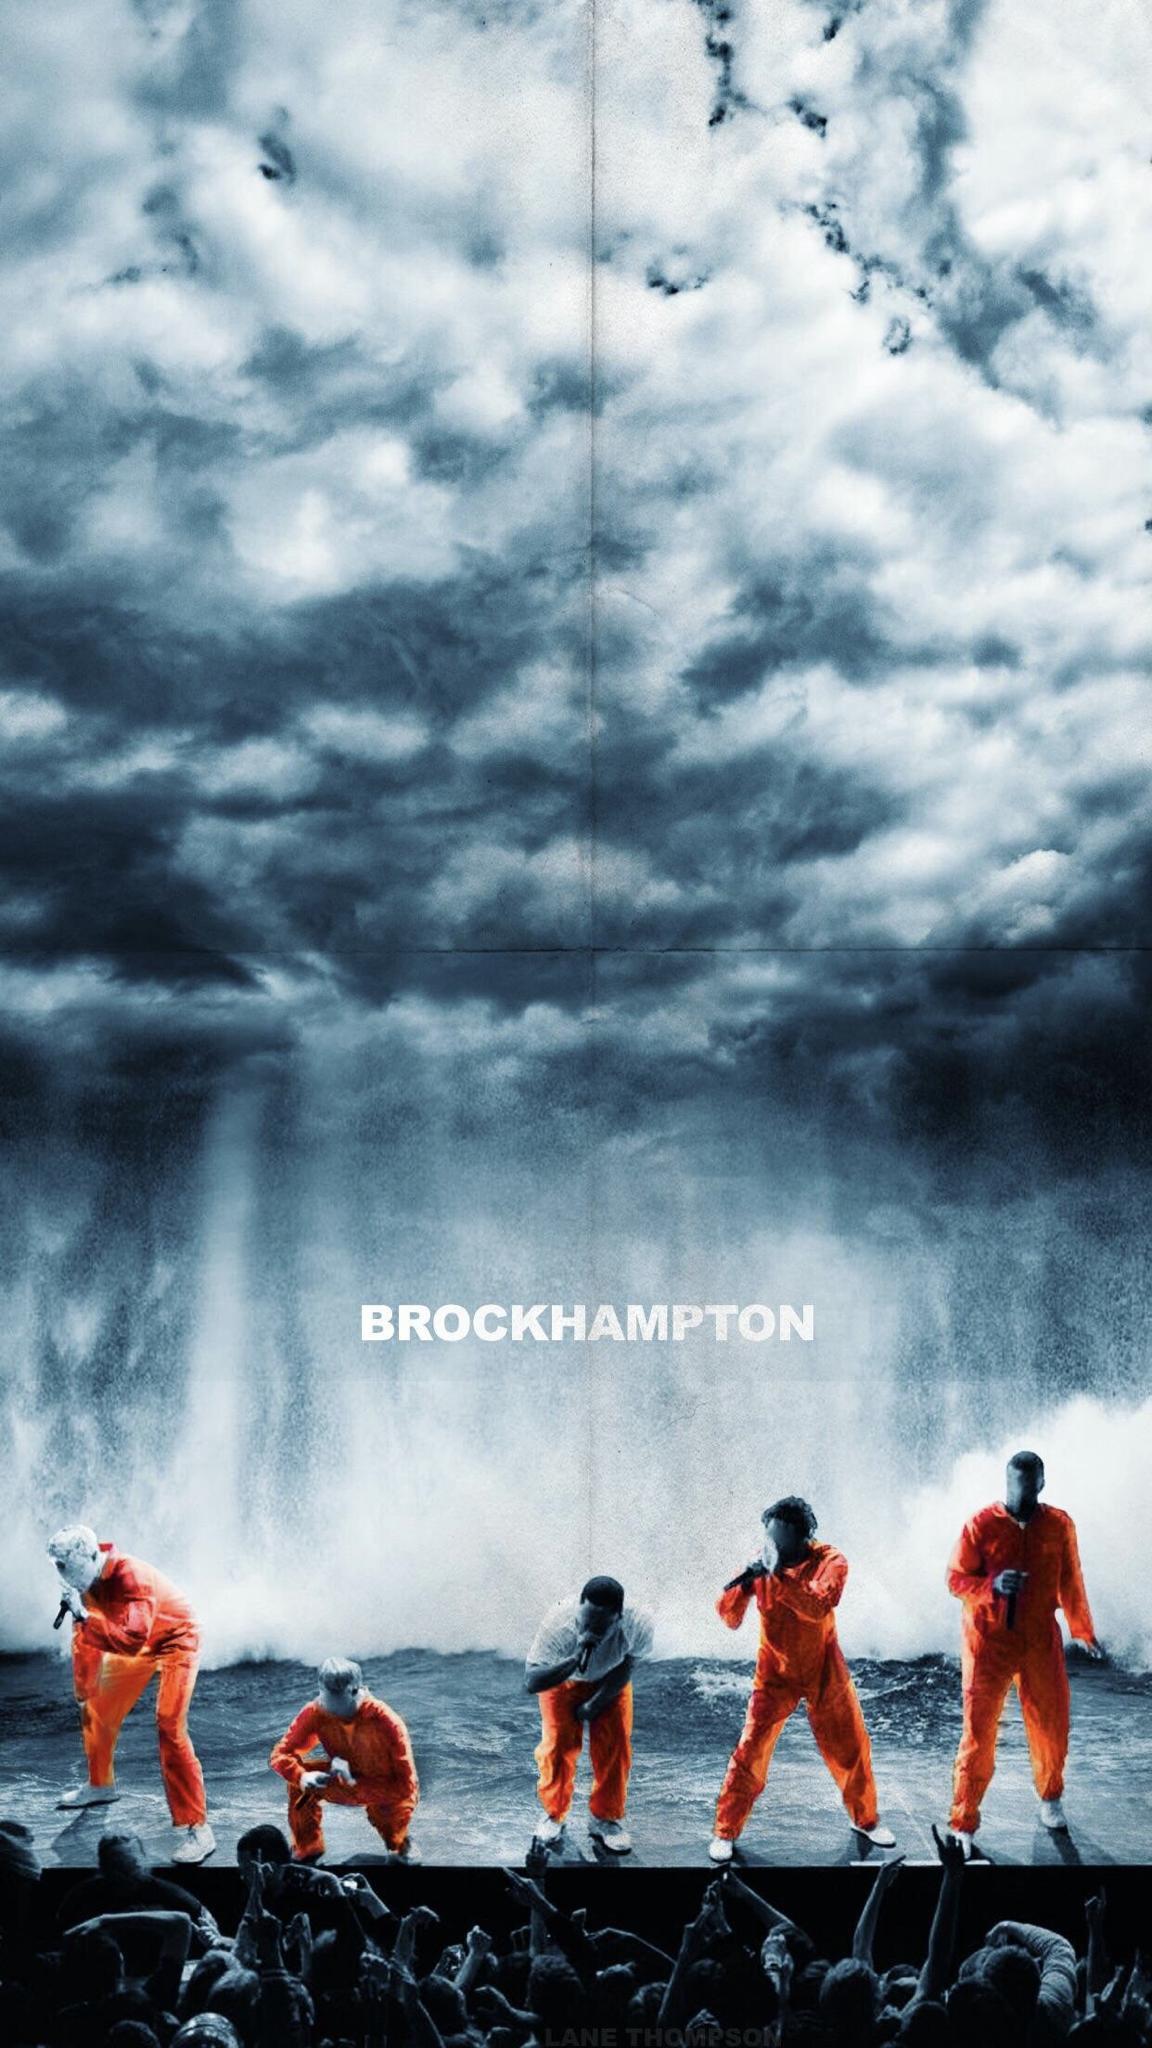 Brockhampton iPhone Wallpaper not mine, found on Reddit